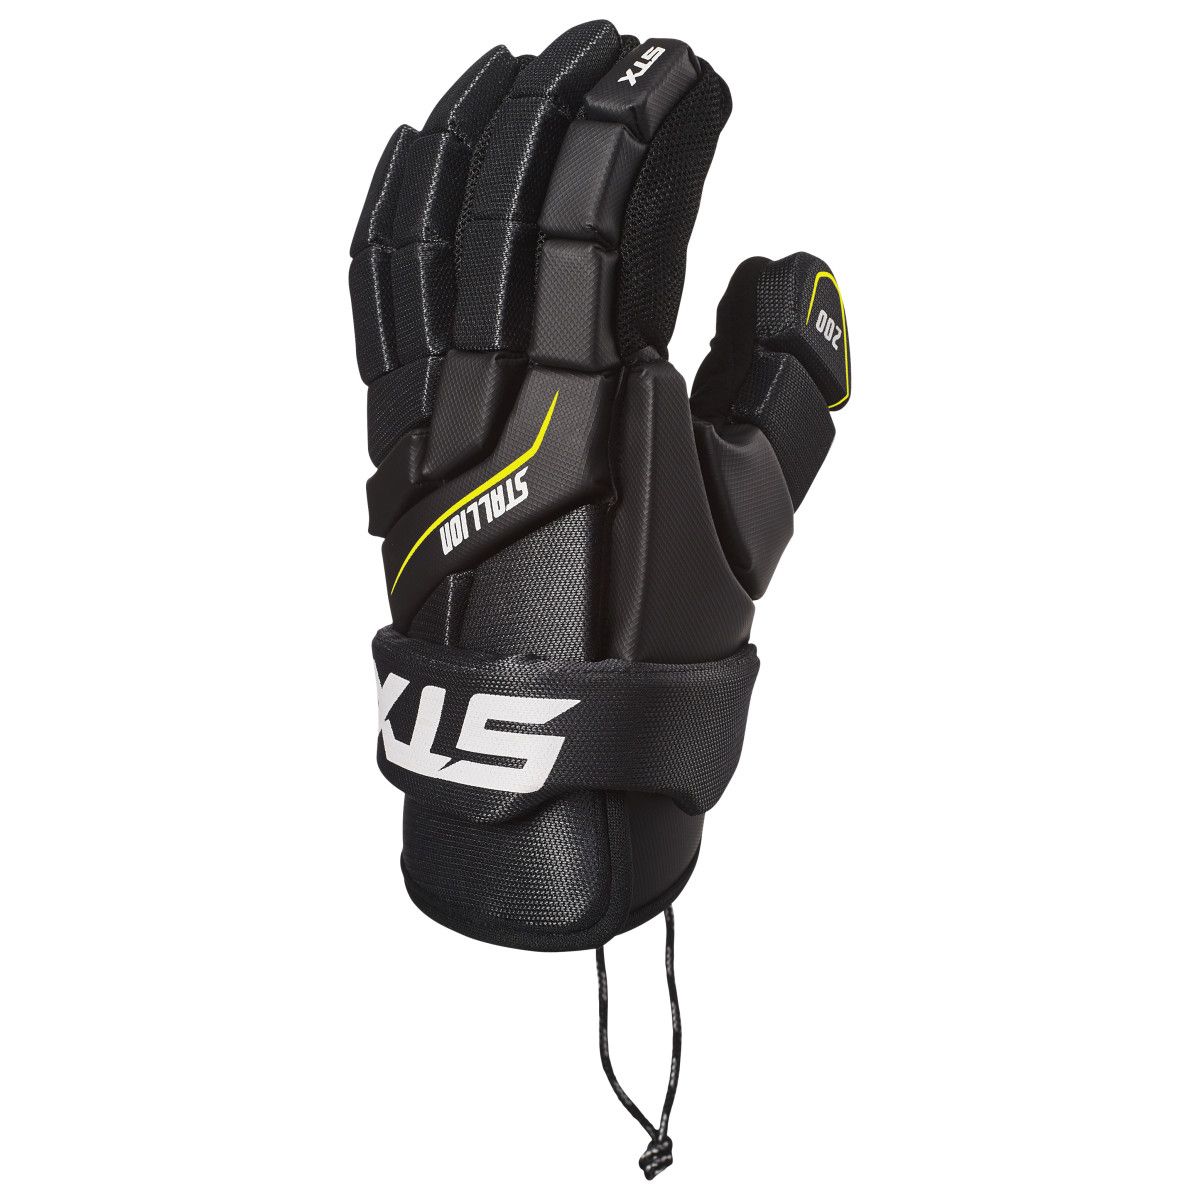 STX Lacrosse Stallion 500 Gloves